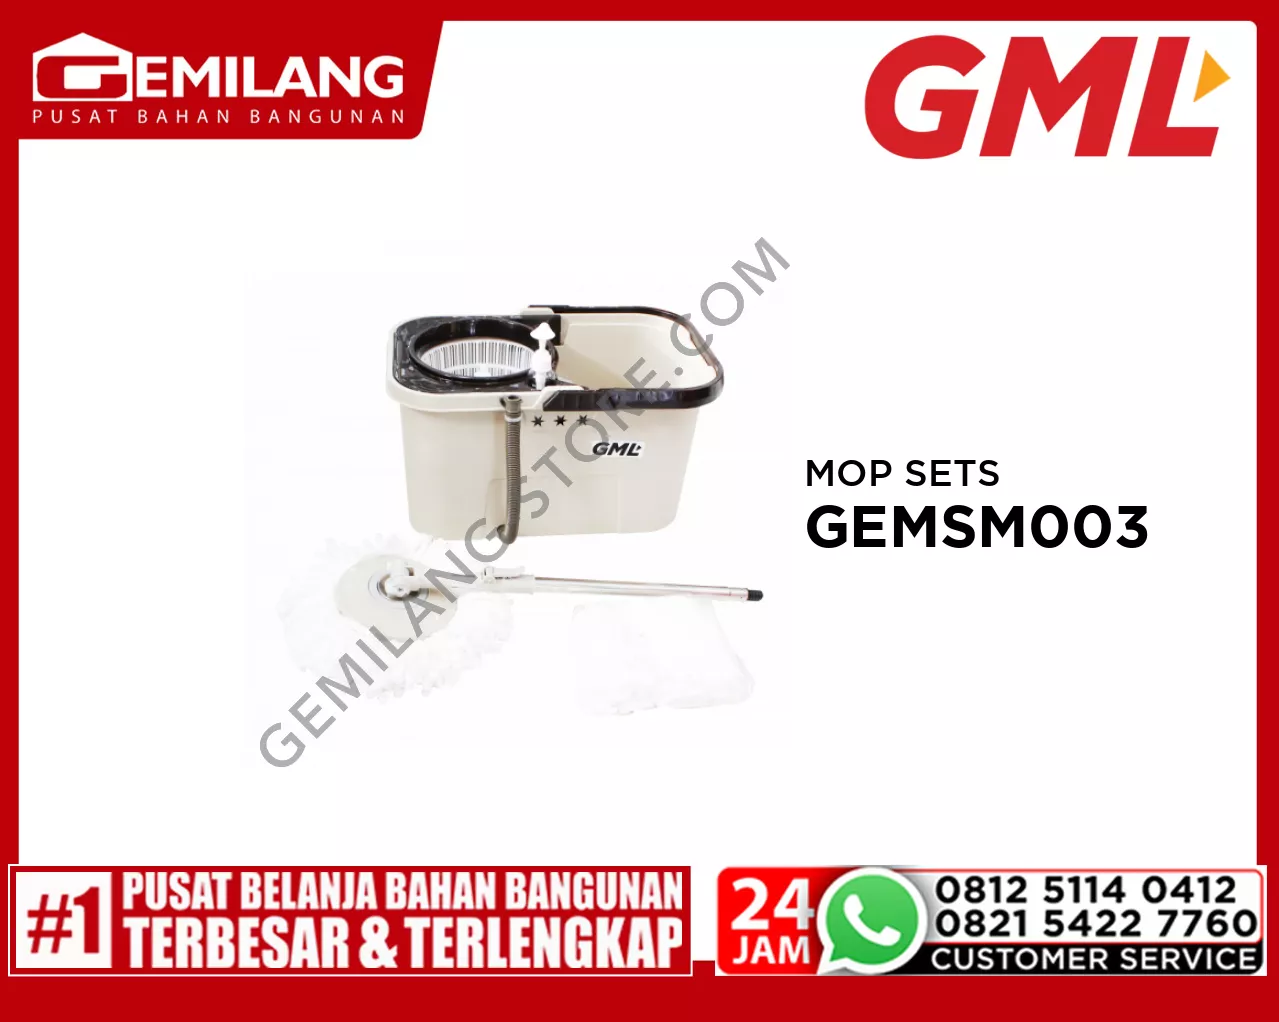 GML MOP SETS WITH 2pc MOP HEADS GEMSM003